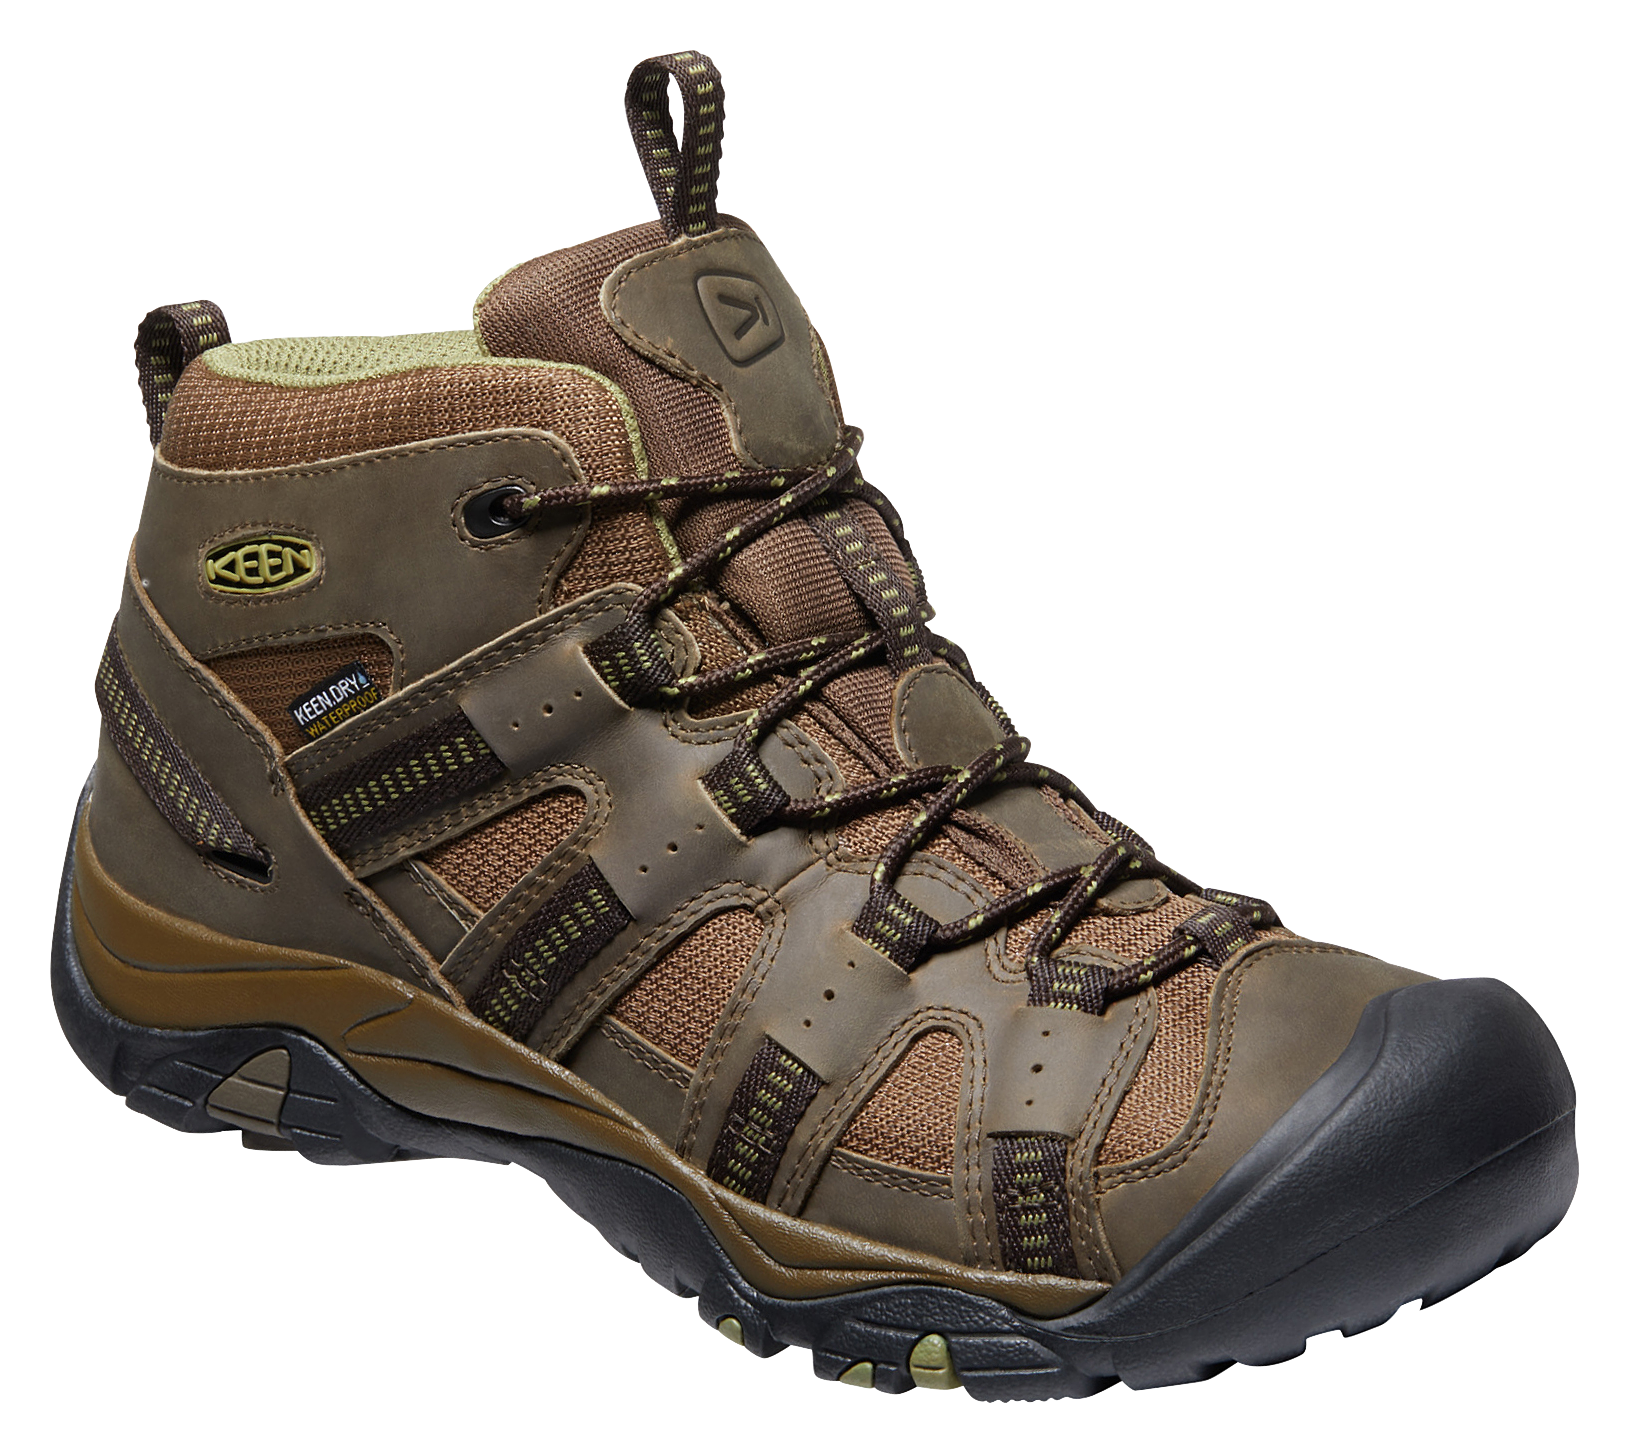 KEEN Siskiyou II Mid Waterproof Hiking Boots for Men - Dark Olive/Olive Drab - 10.5M